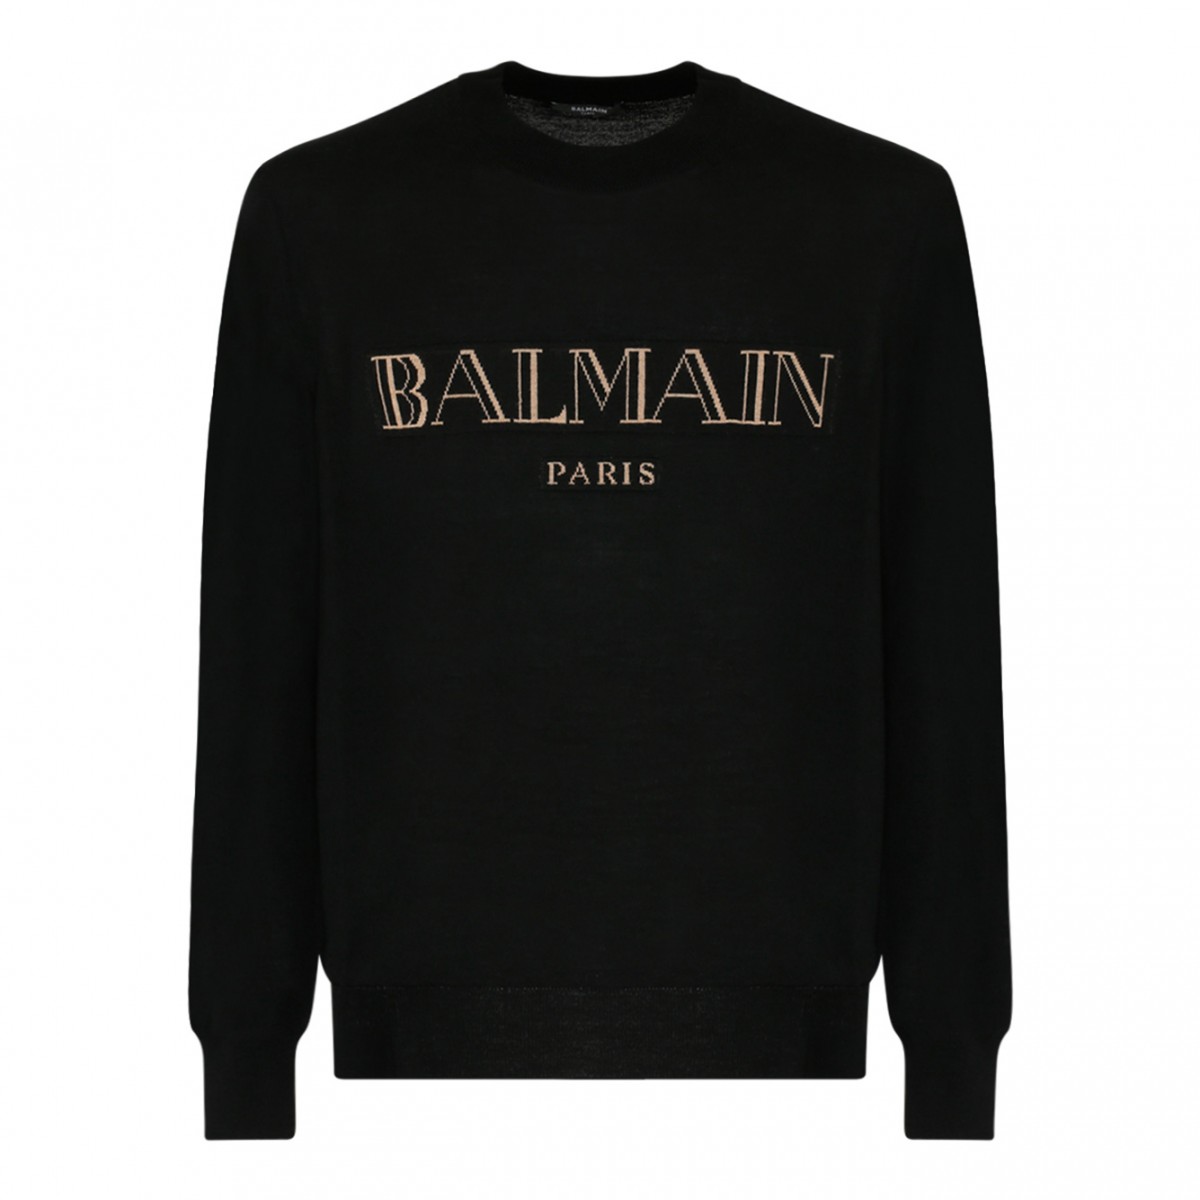 Balmain Black Merino Wool Logo Print Knitted Jumper.